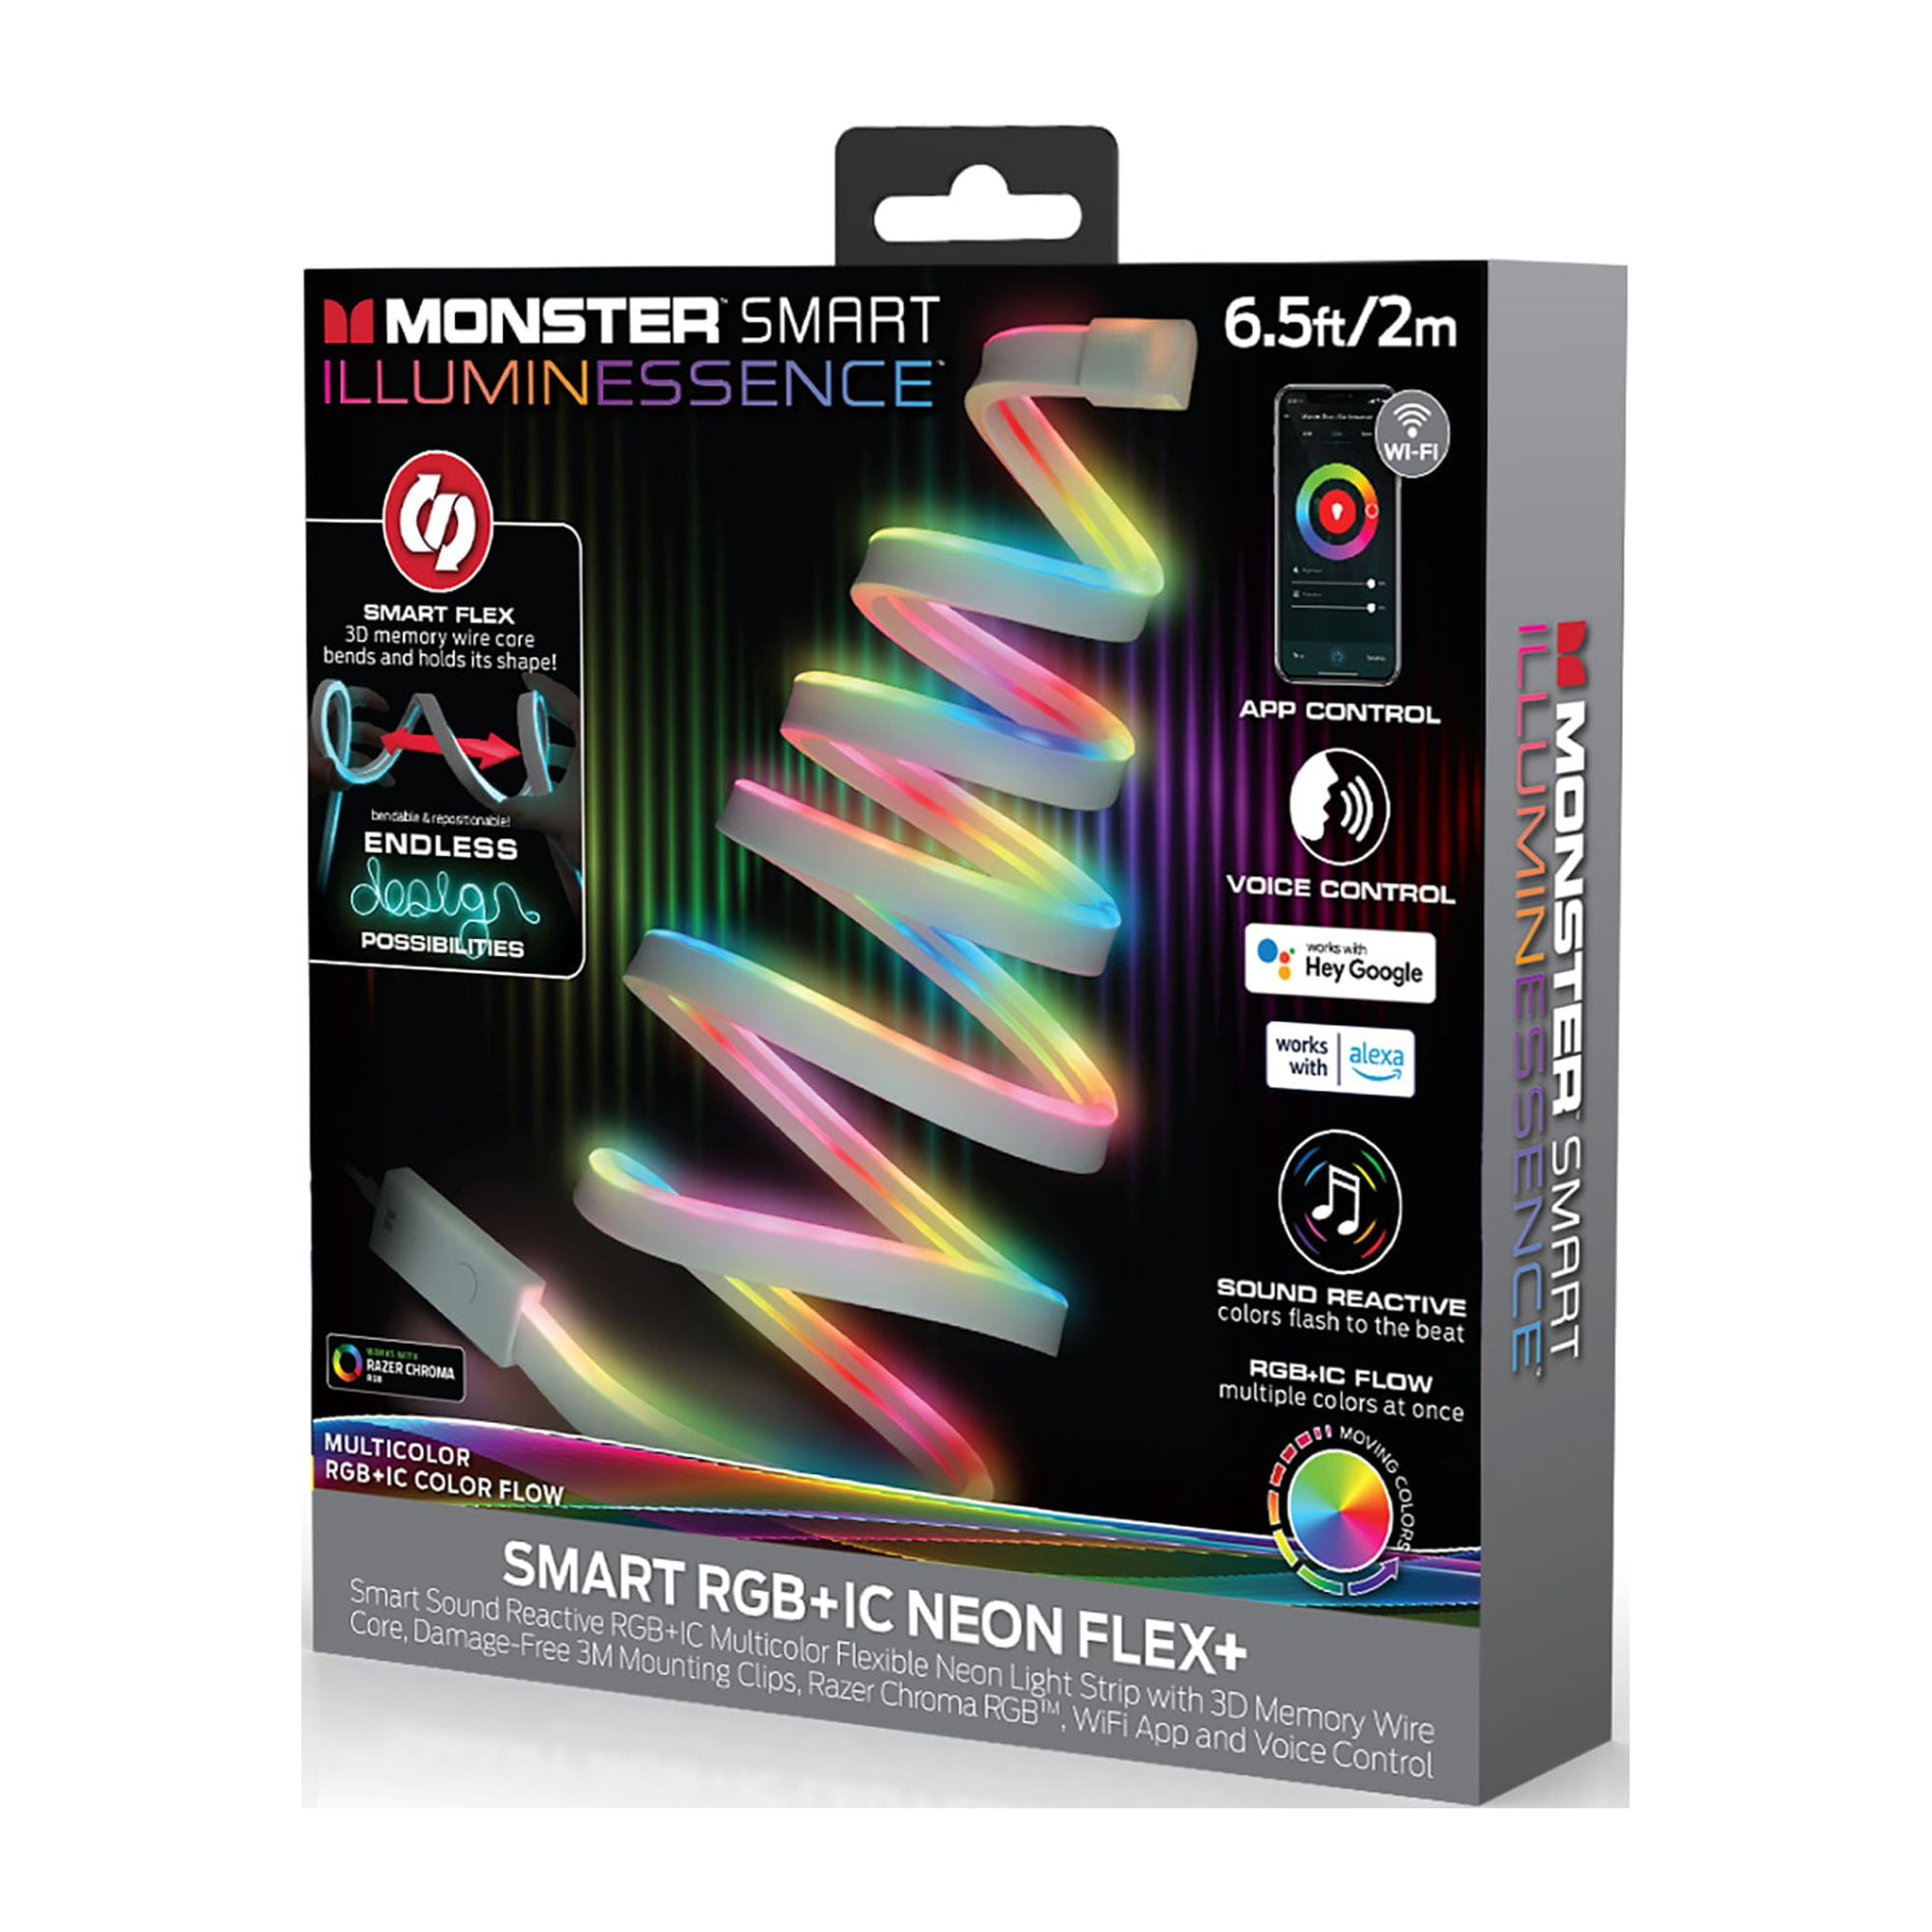 Xtreme 6.5ft Lit Multicolor Neon LED Strip, Customizable, 20 Flash Modes,  0.25 lb, Remote Control 